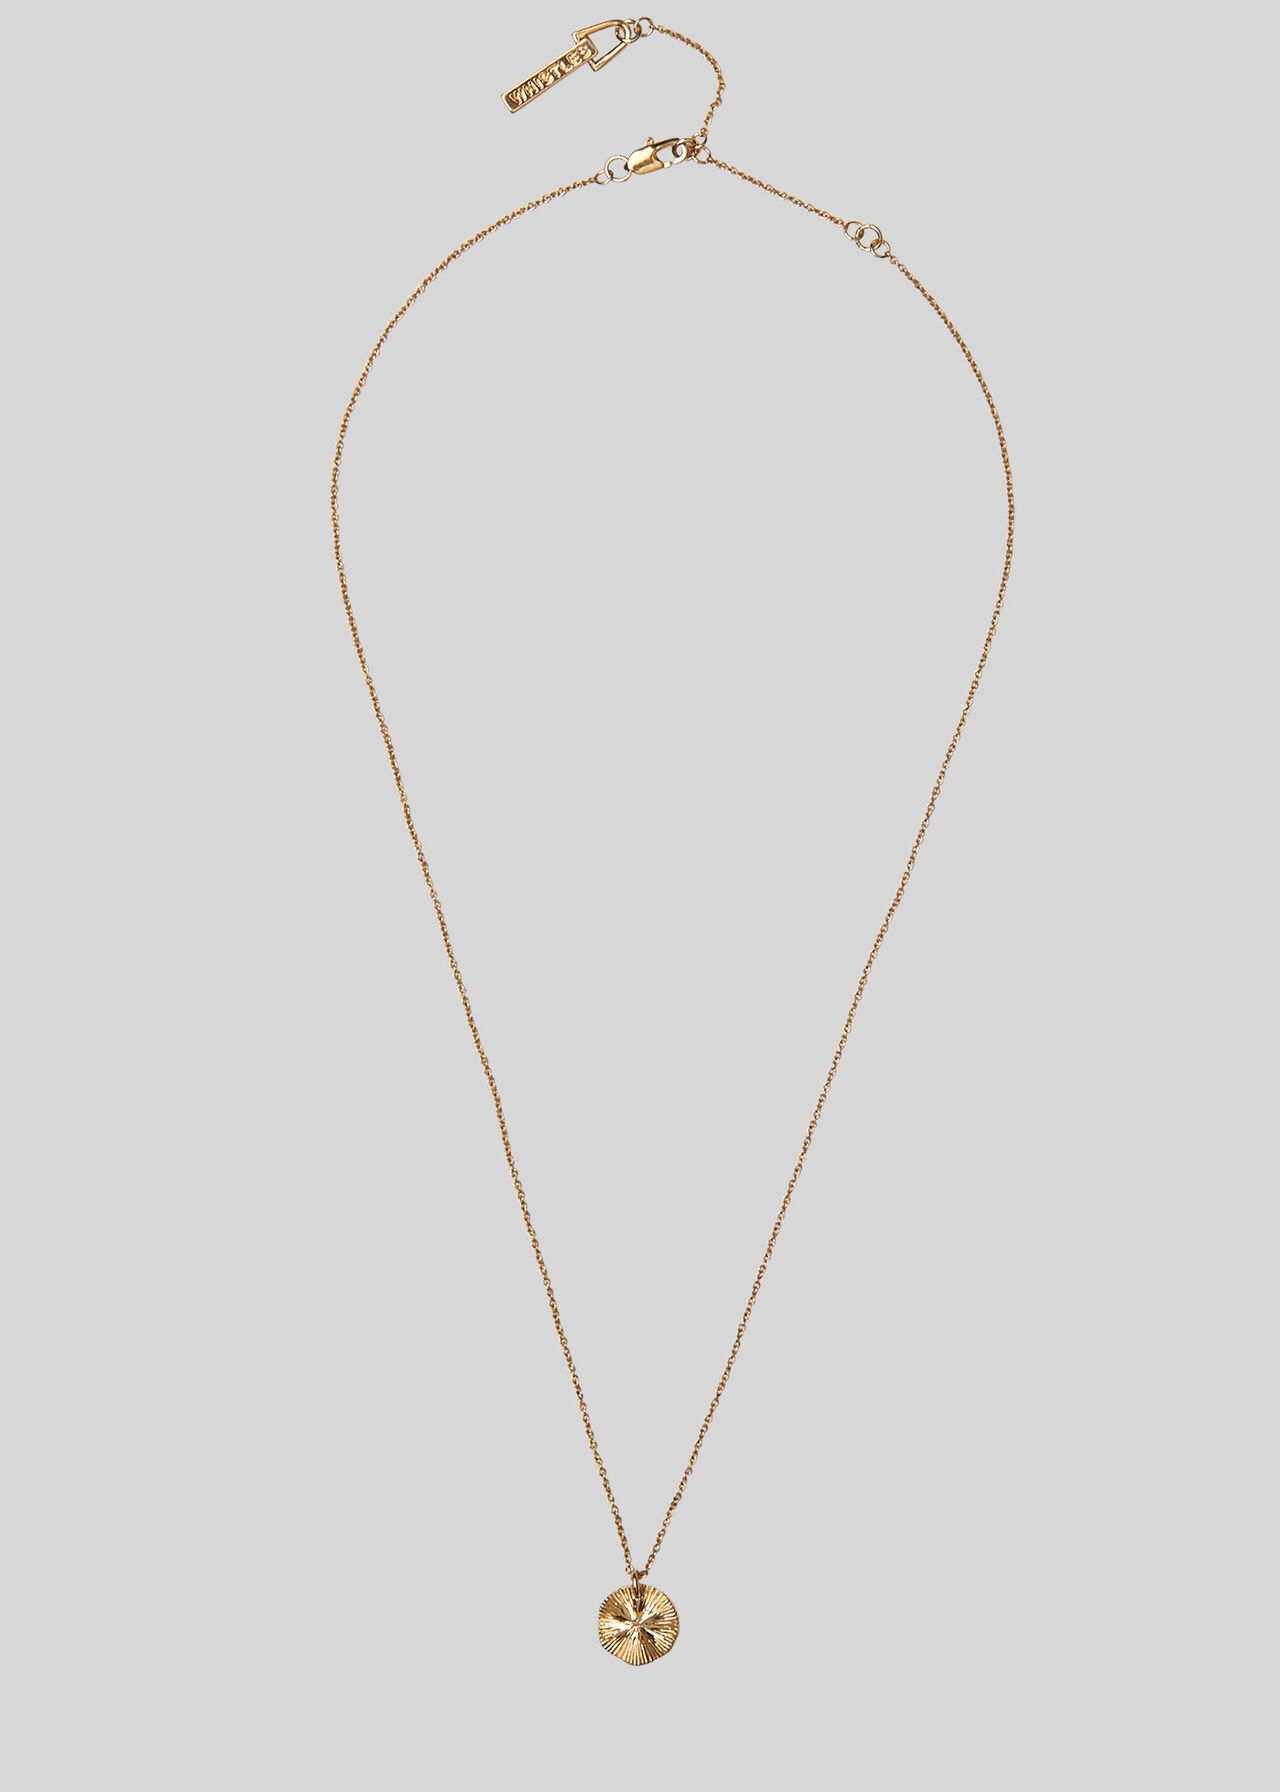 Mini Textured Fan Necklace Gold/Multi